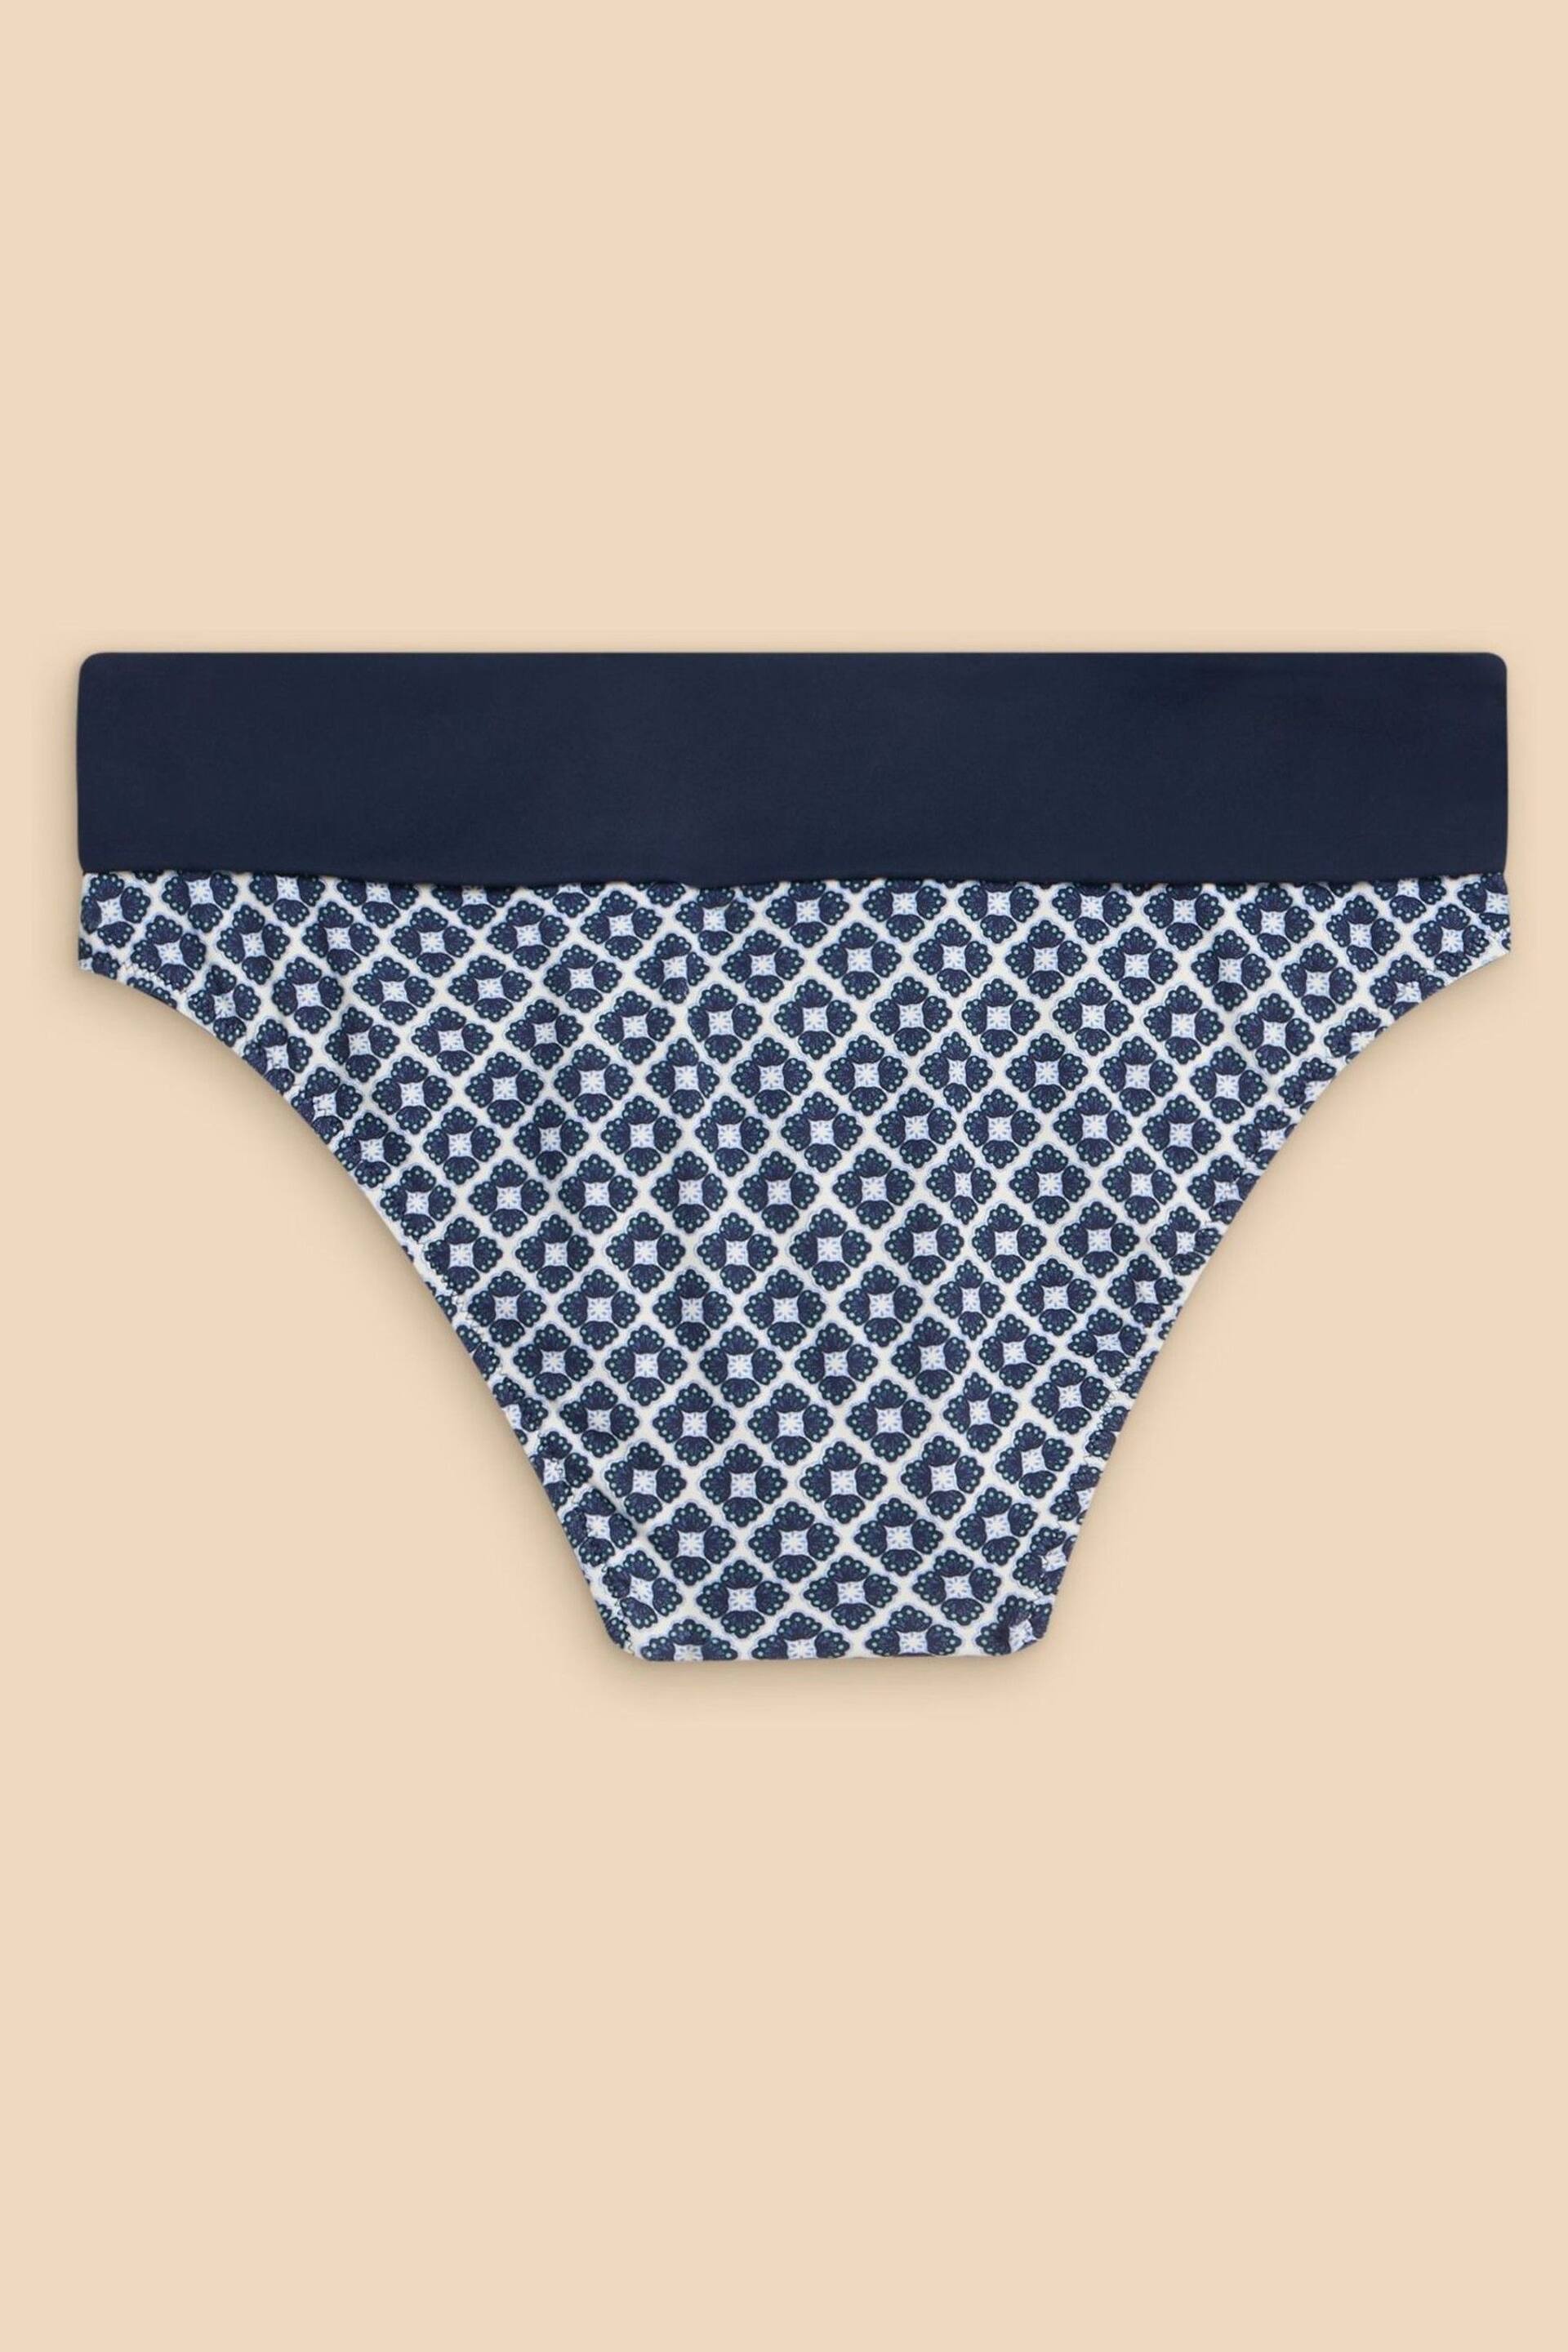 White Stuff Blue Reversible Fold Down Bottom Swimsuit - Image 6 of 7